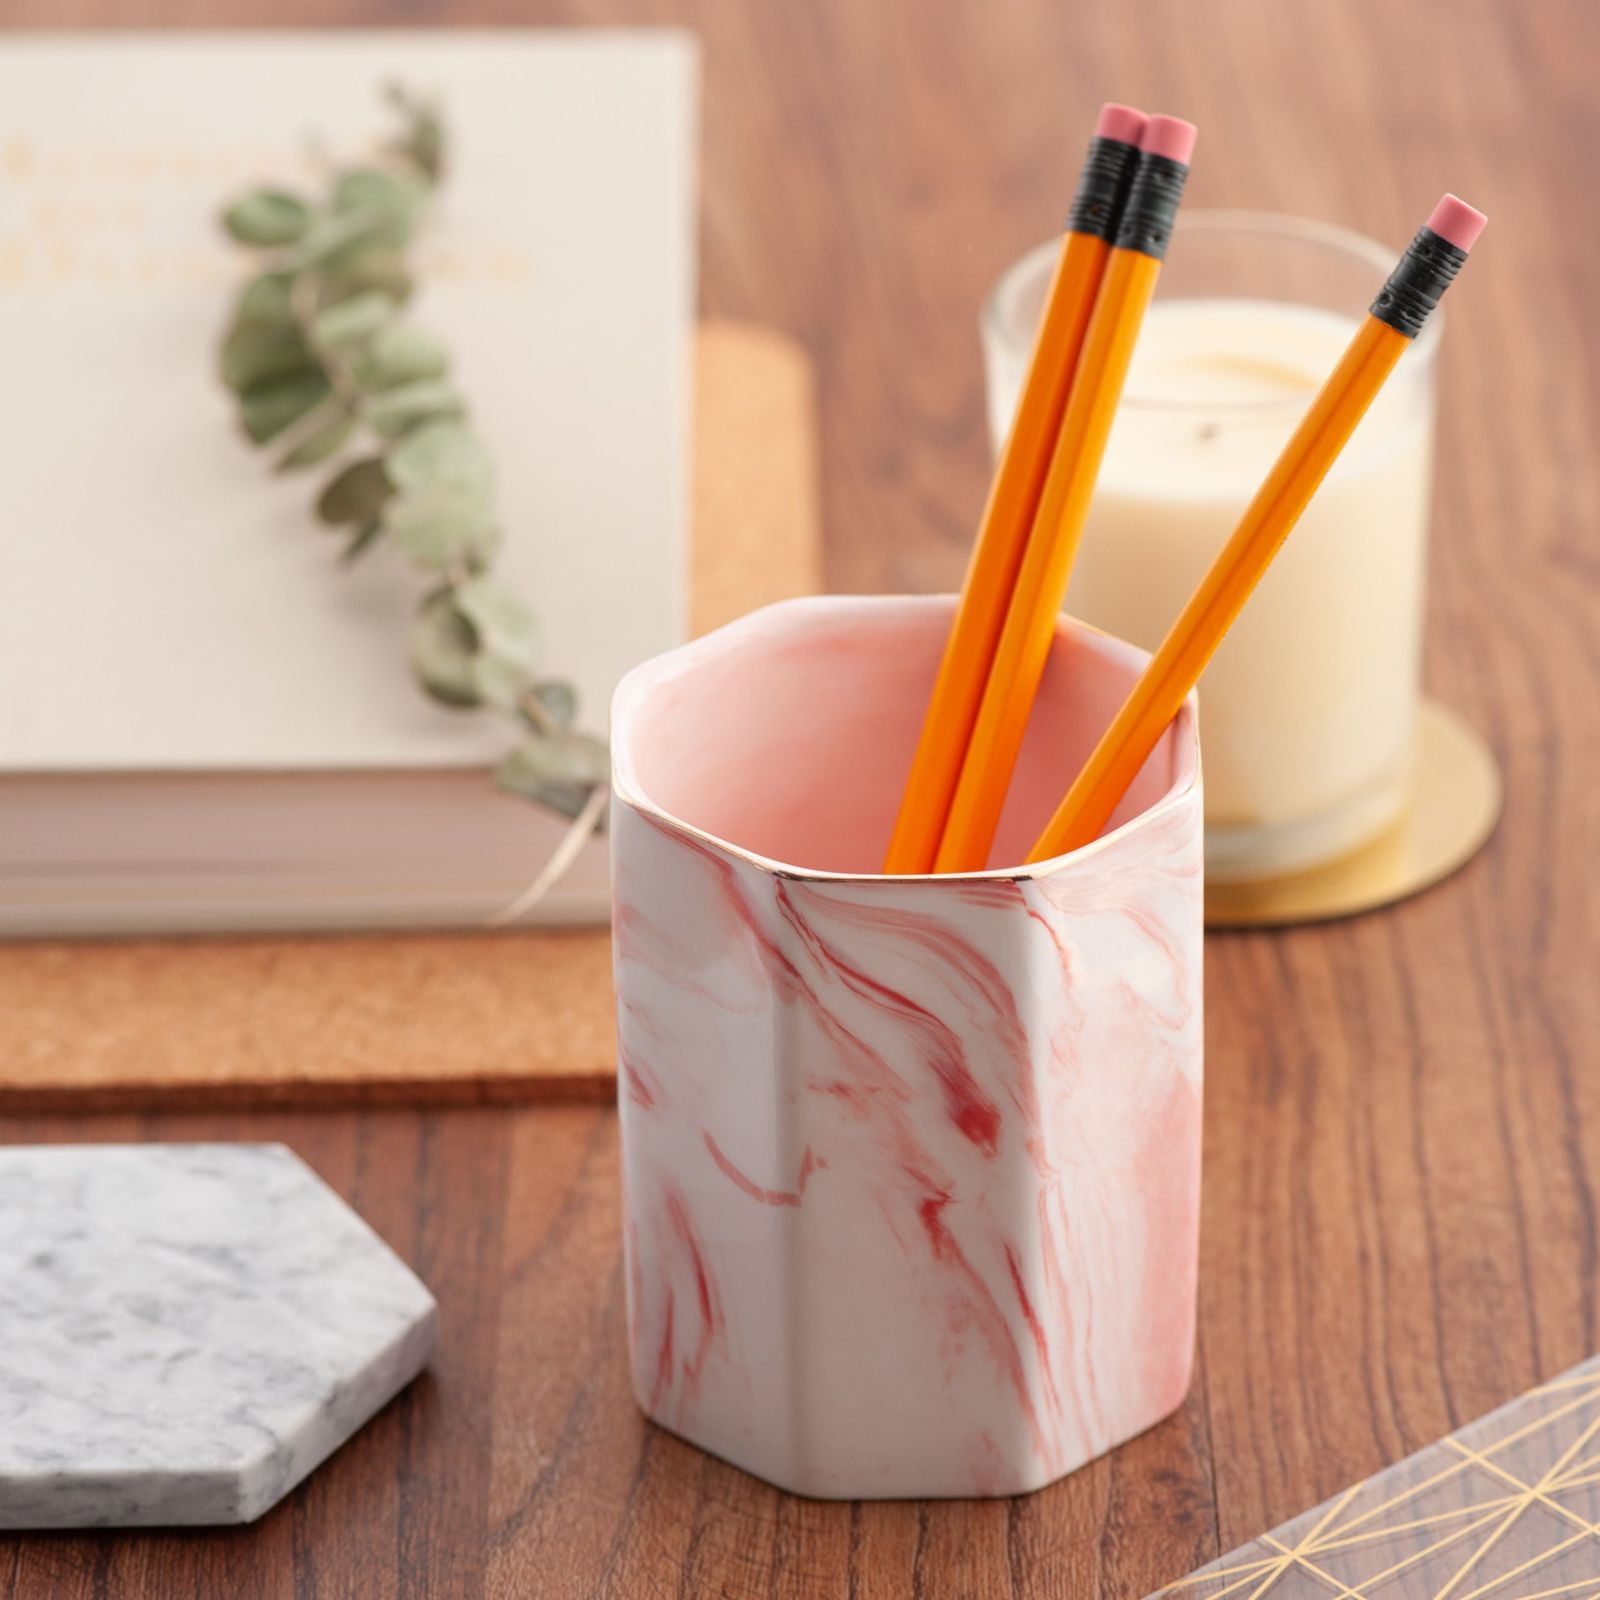 Gray YOSCO Ceramic Desk Pen Holder Stand Marble Pattern Pencil Cup Pot Desk Organizer Makeup Brush Holder 